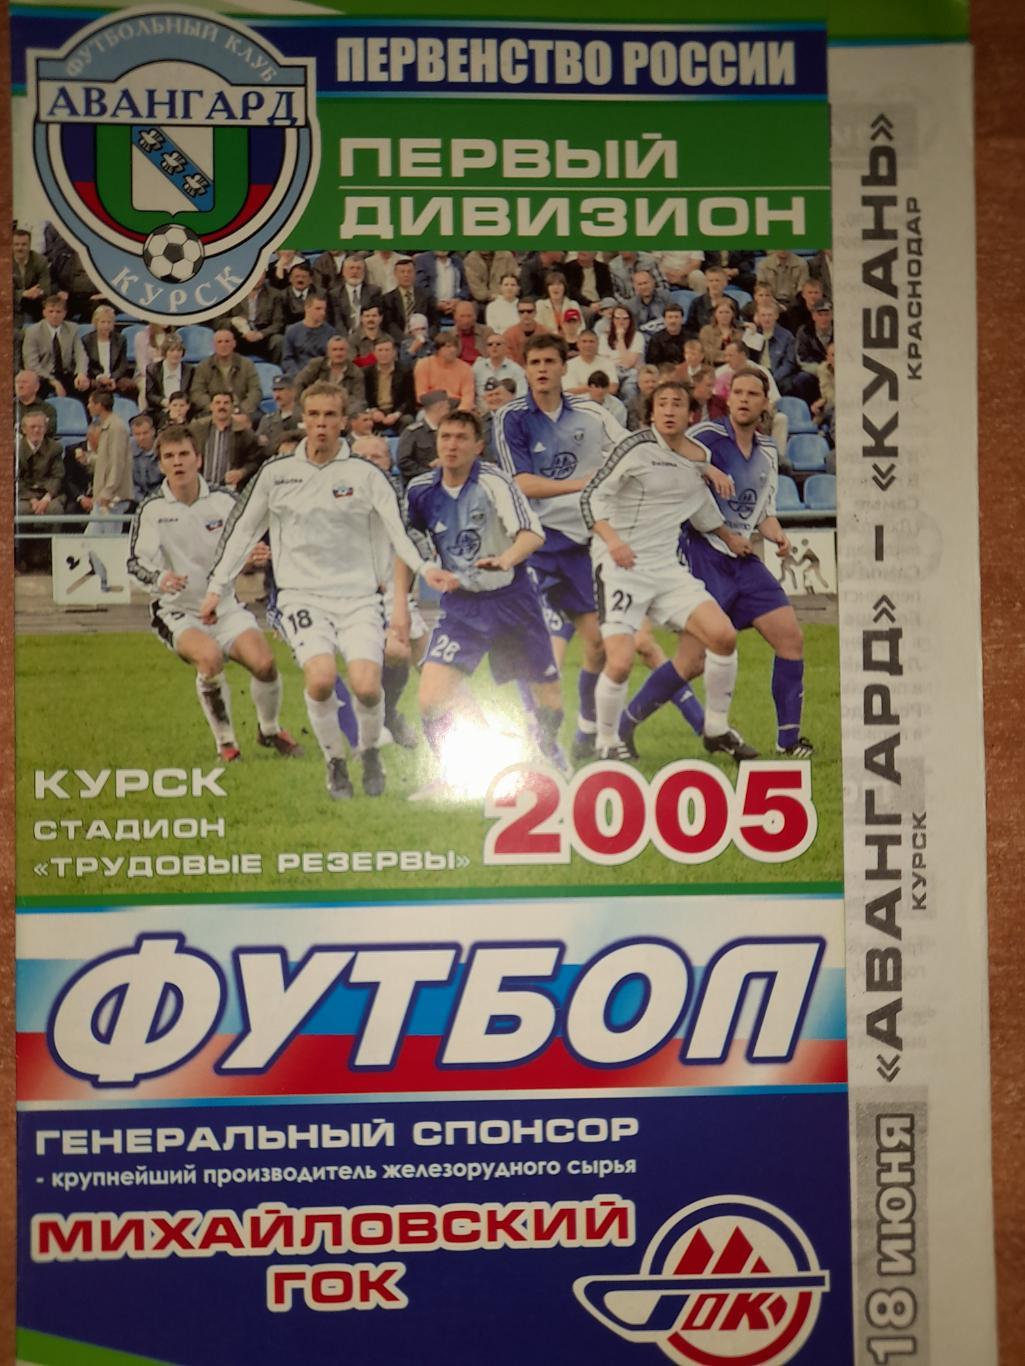 Авангард Курск - Кубань Краснодар, Первый дивизион, 18.06.2005г.